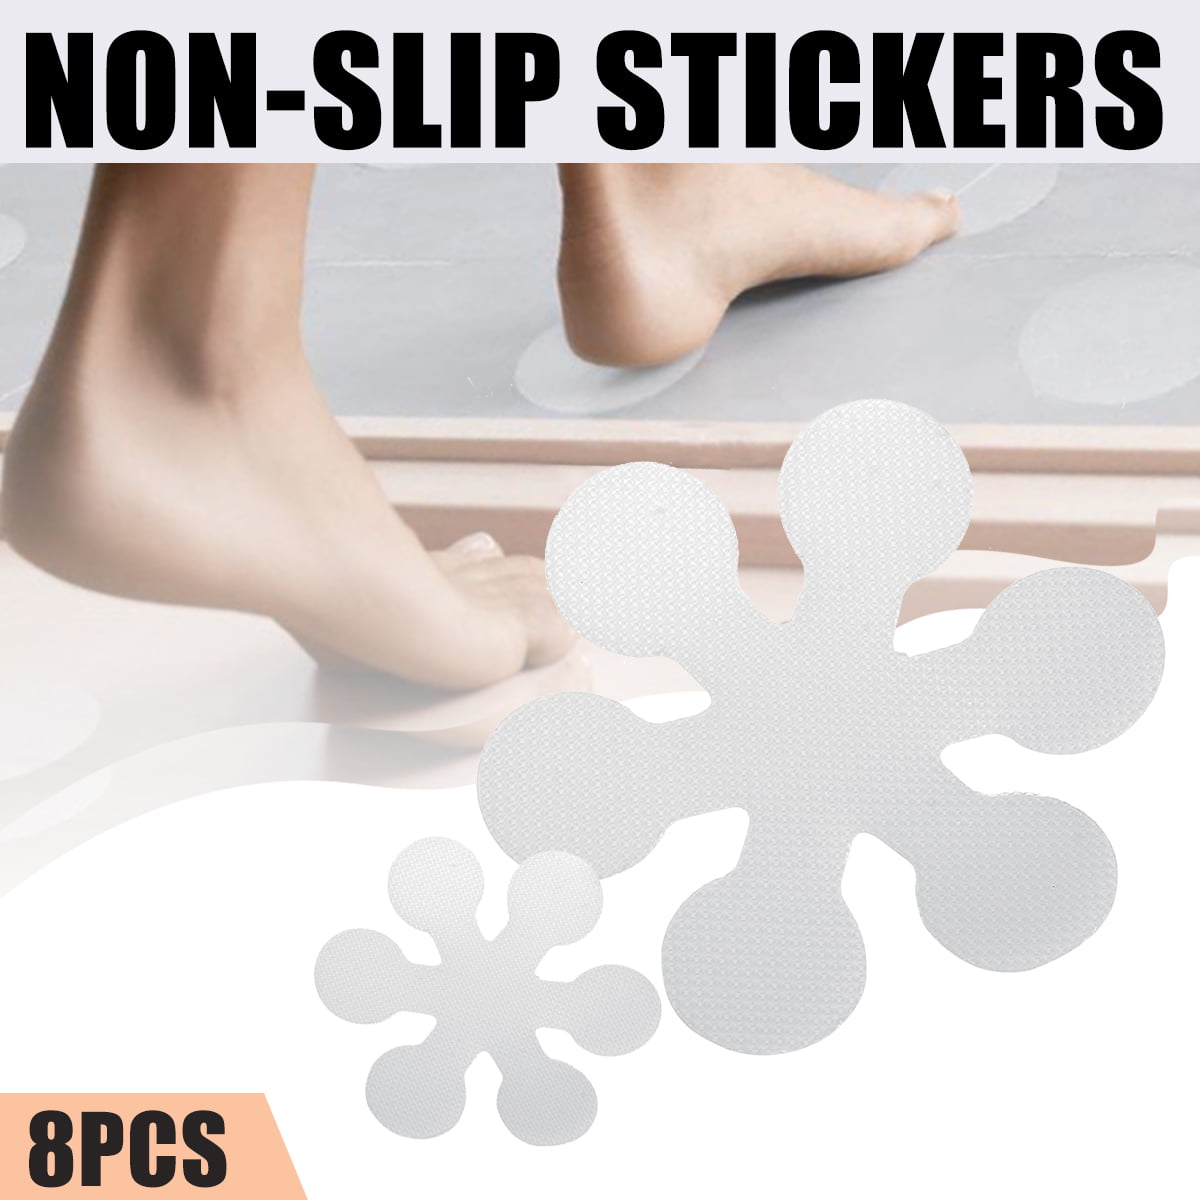 Non Slip Stickers Anti Skid Tape, Bathtub Floor Grips